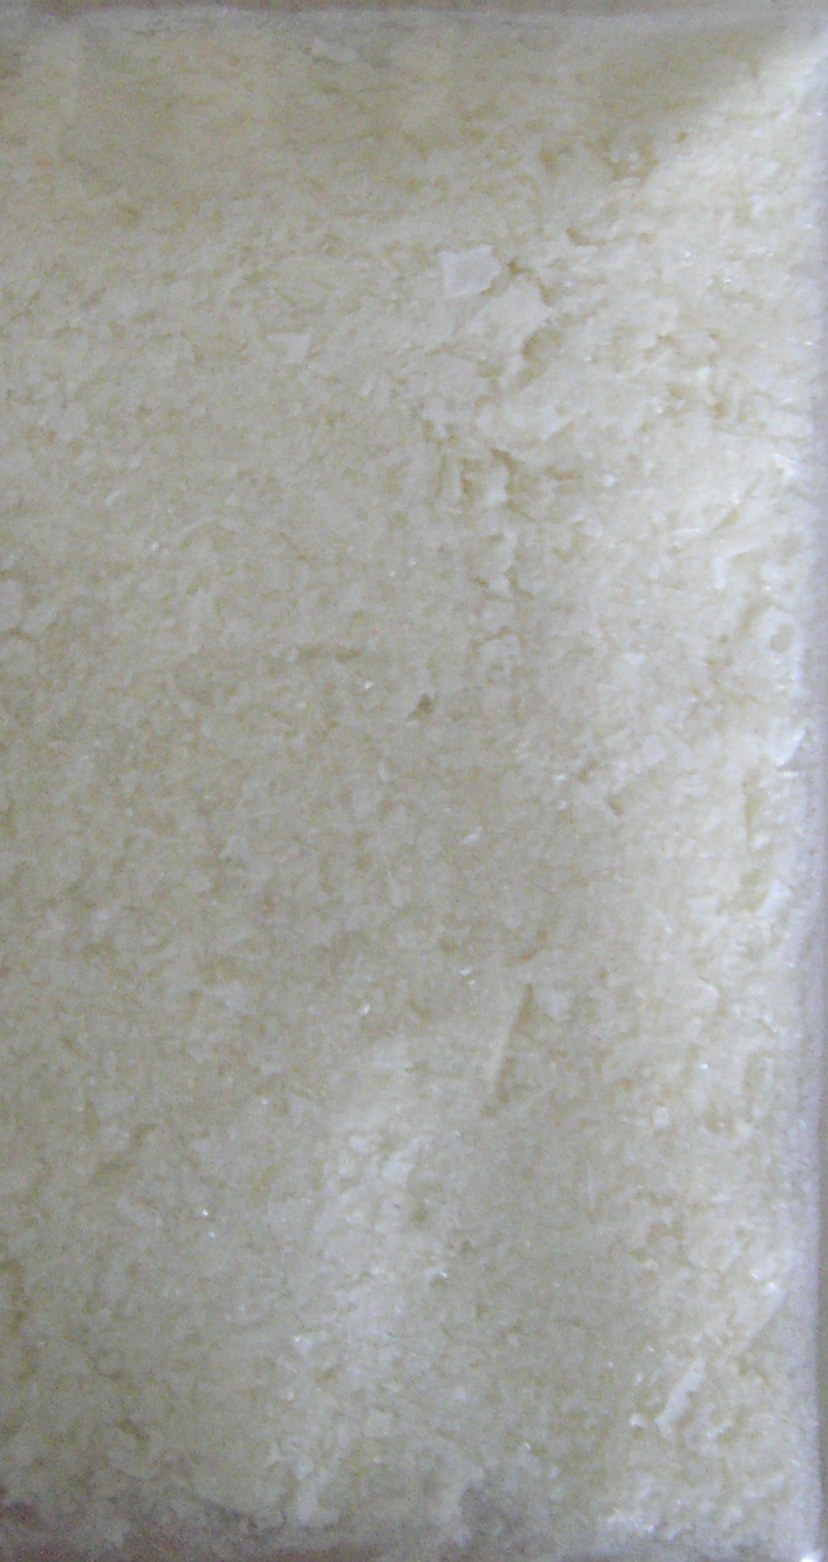 Bovine Colostrums Freeze-dried Powder